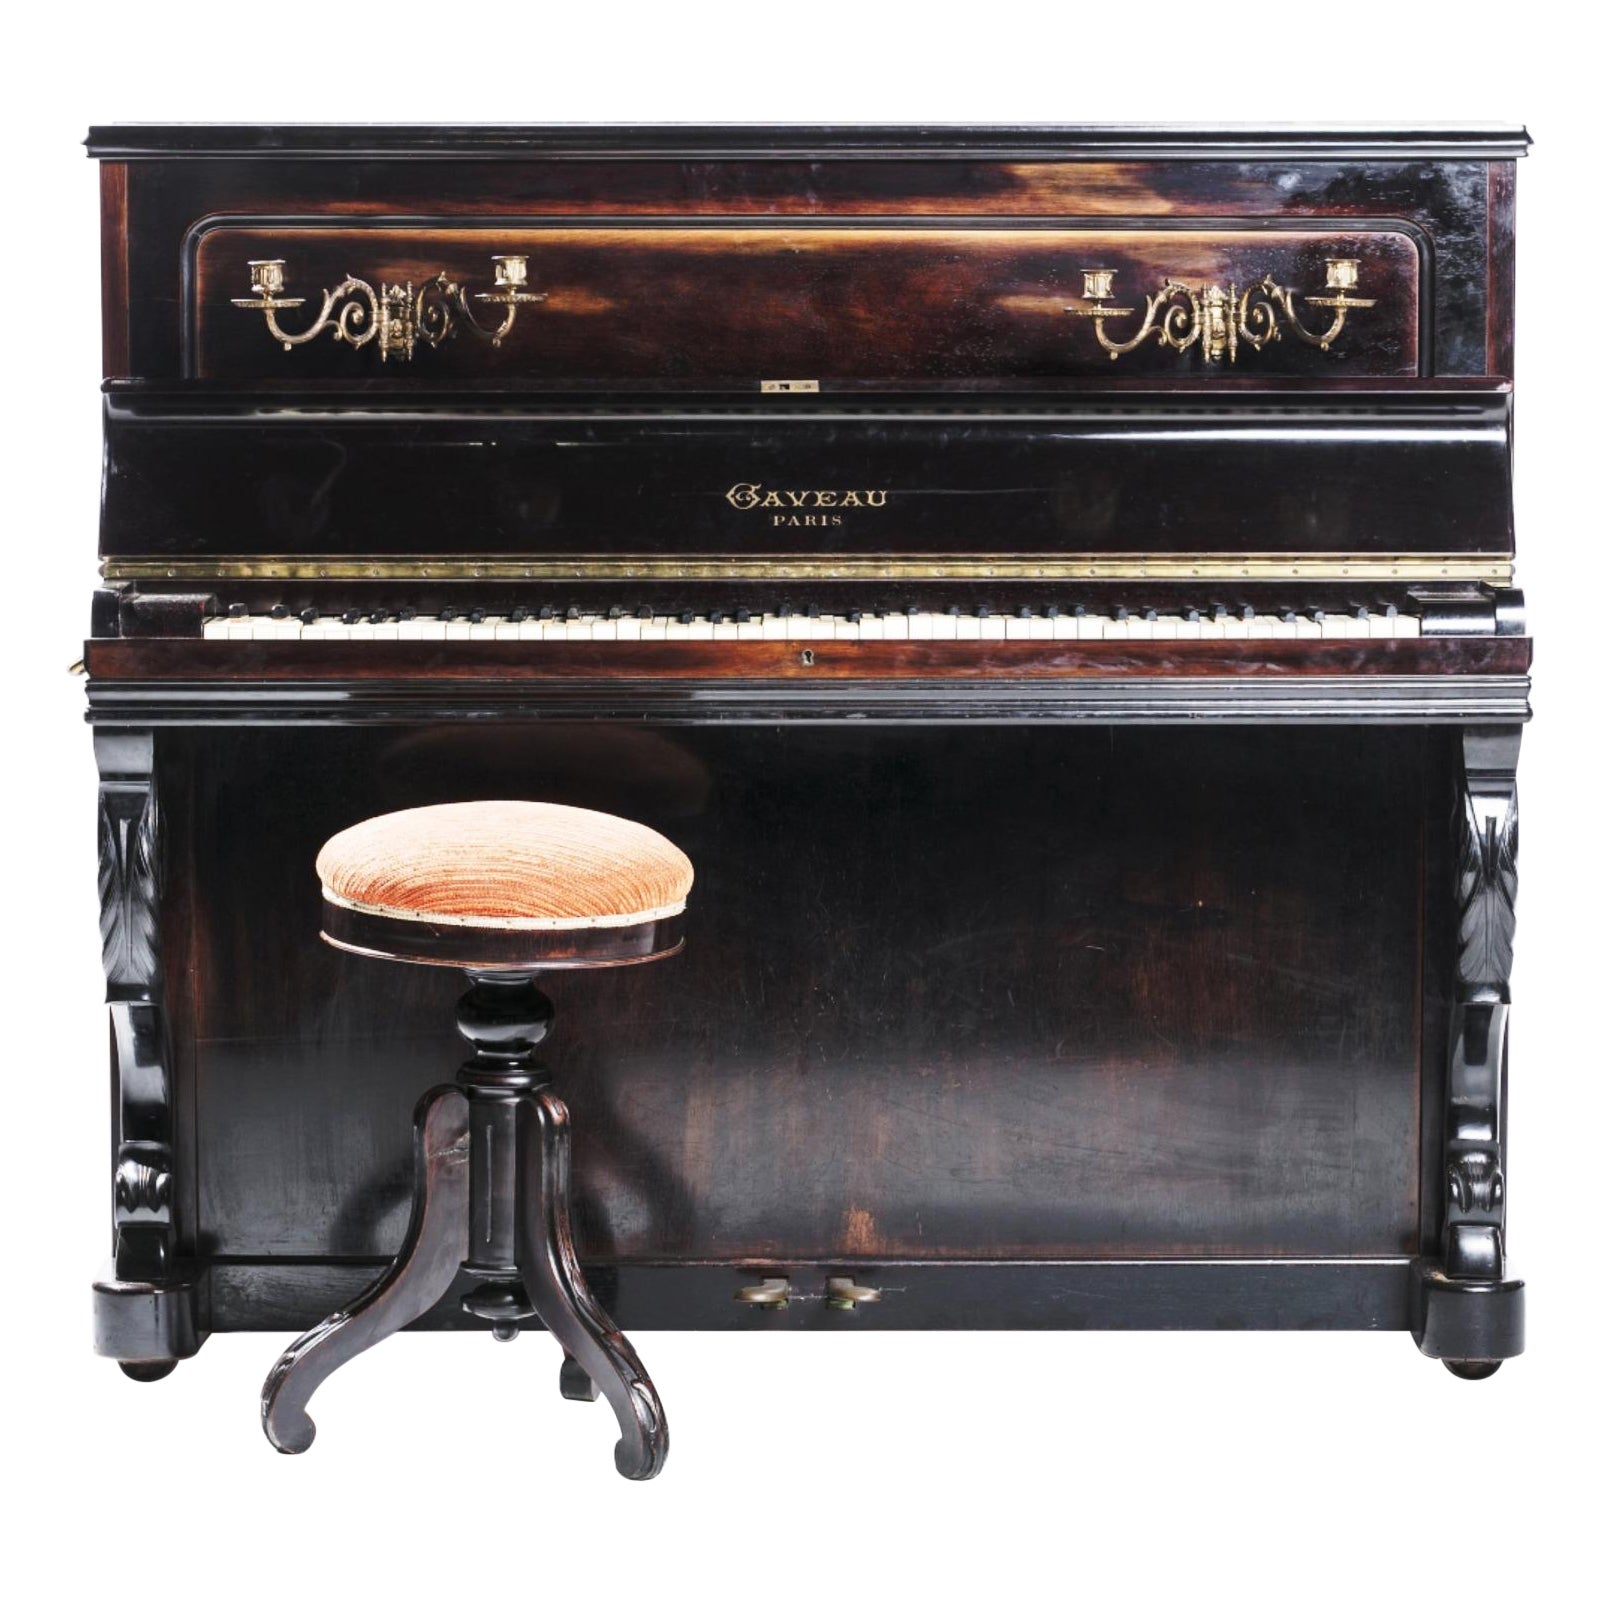 Gaveau Piano - 4 For Sale on 1stDibs | gaveau piano for sale, gaveau paris  piano price, piano droit gaveau occasion prix